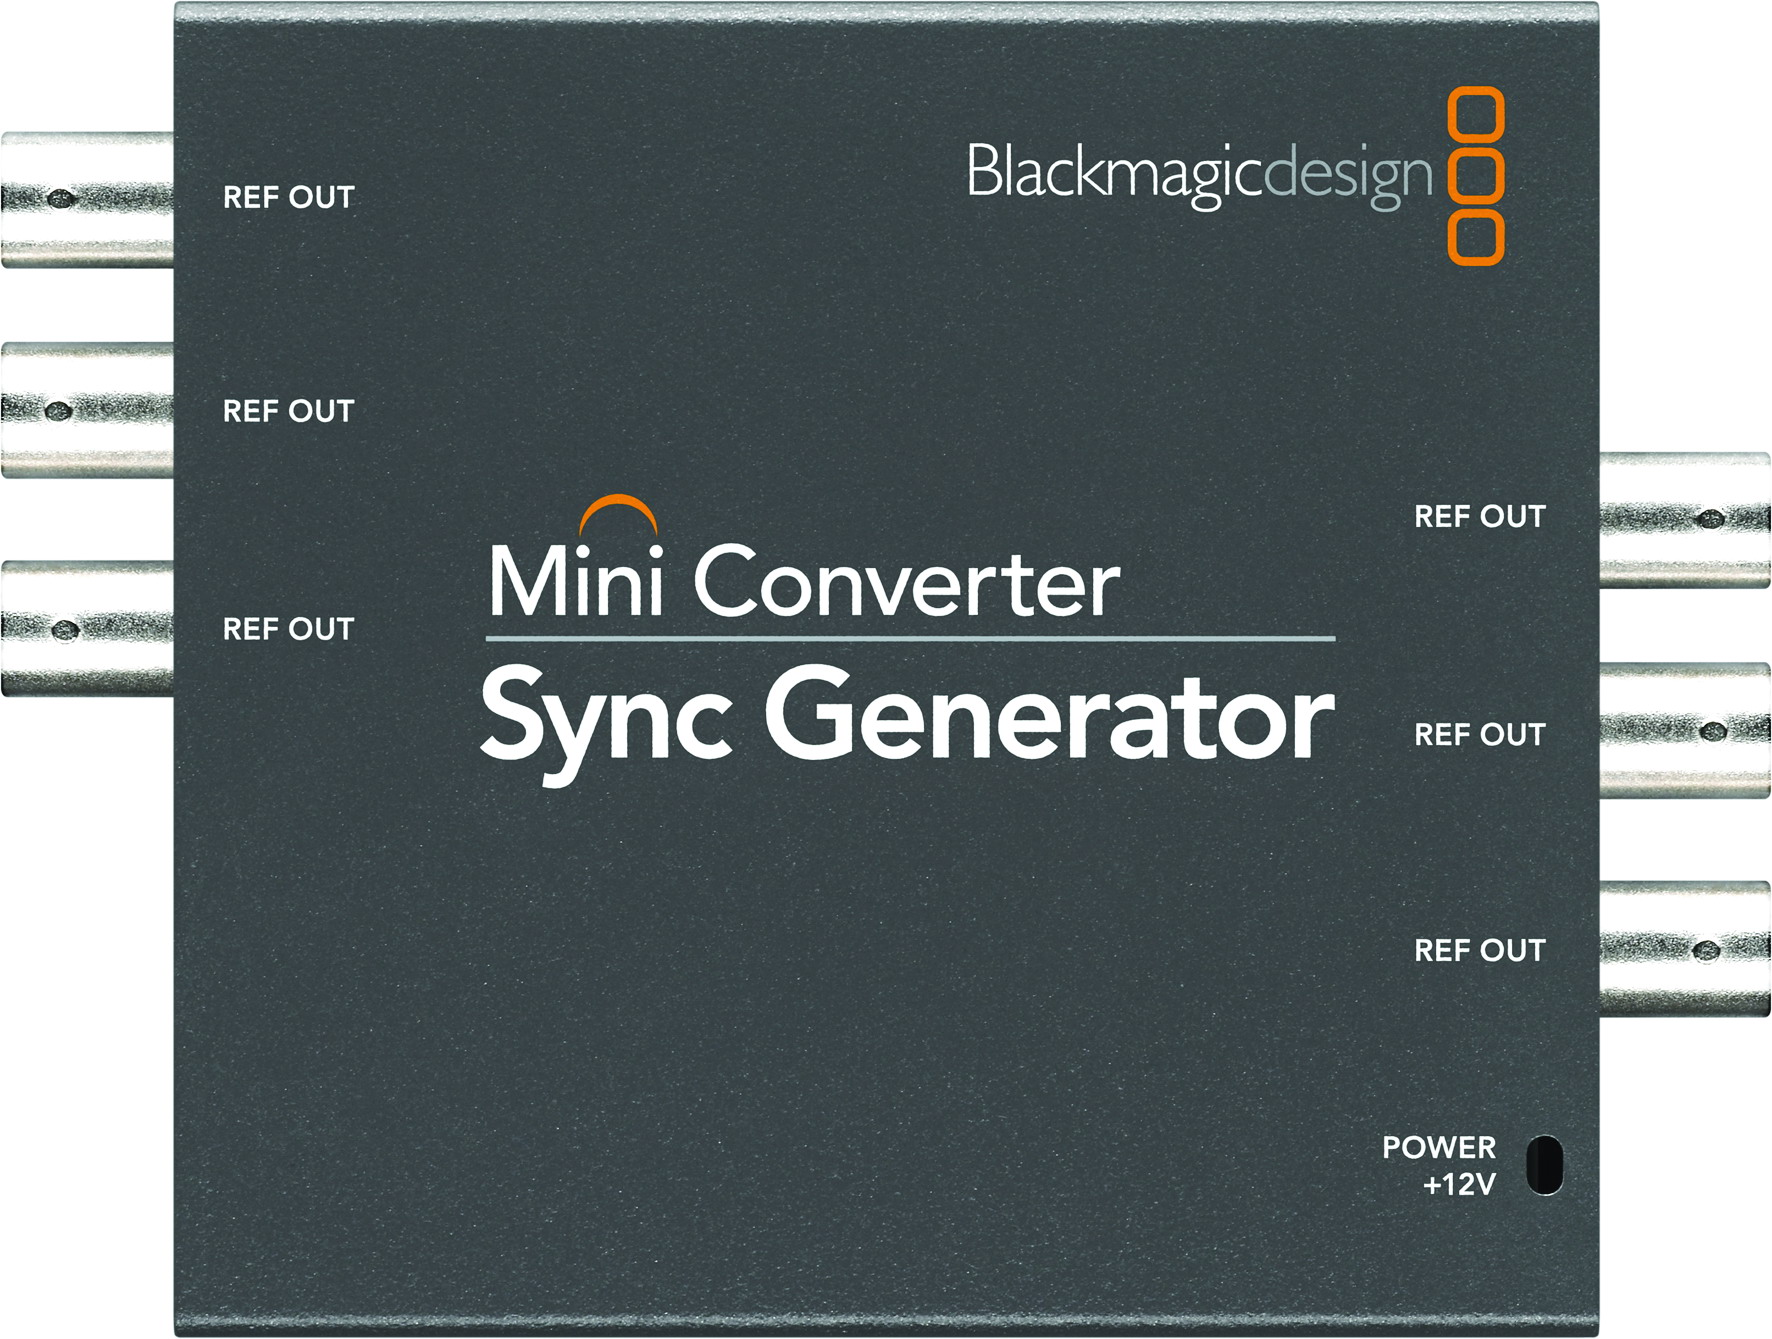 Mini Converter - Sync Generator конвертер Blackmagic